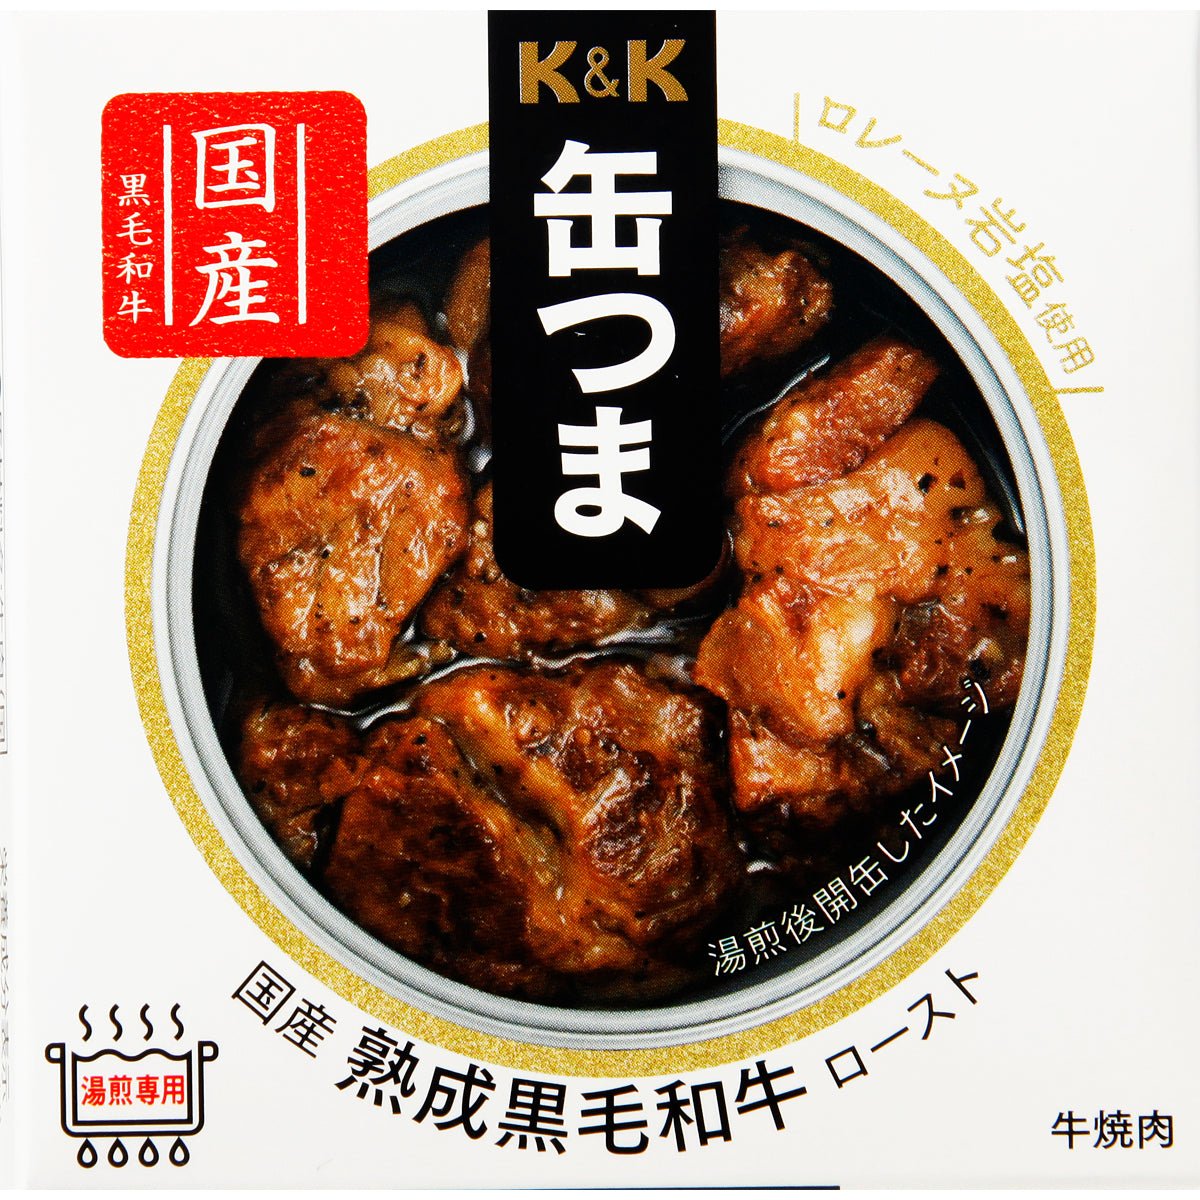 K&K CAN KOQUA EN AGADO AGADO KURGE KURGE WAGYU Beef